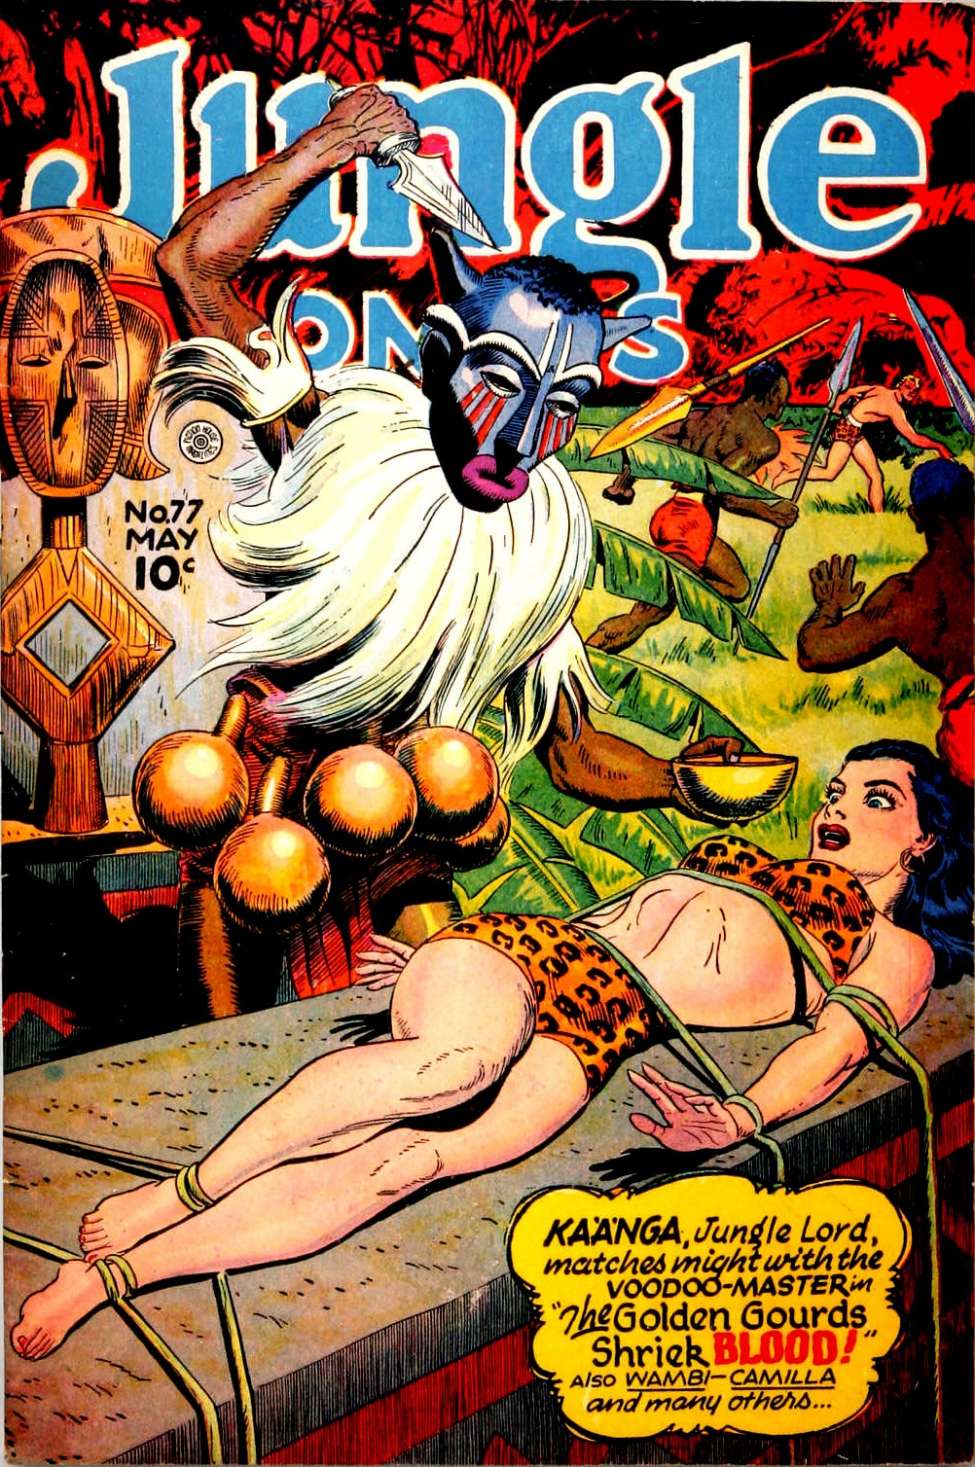 Comic Book Cover For Jungle Comics 77